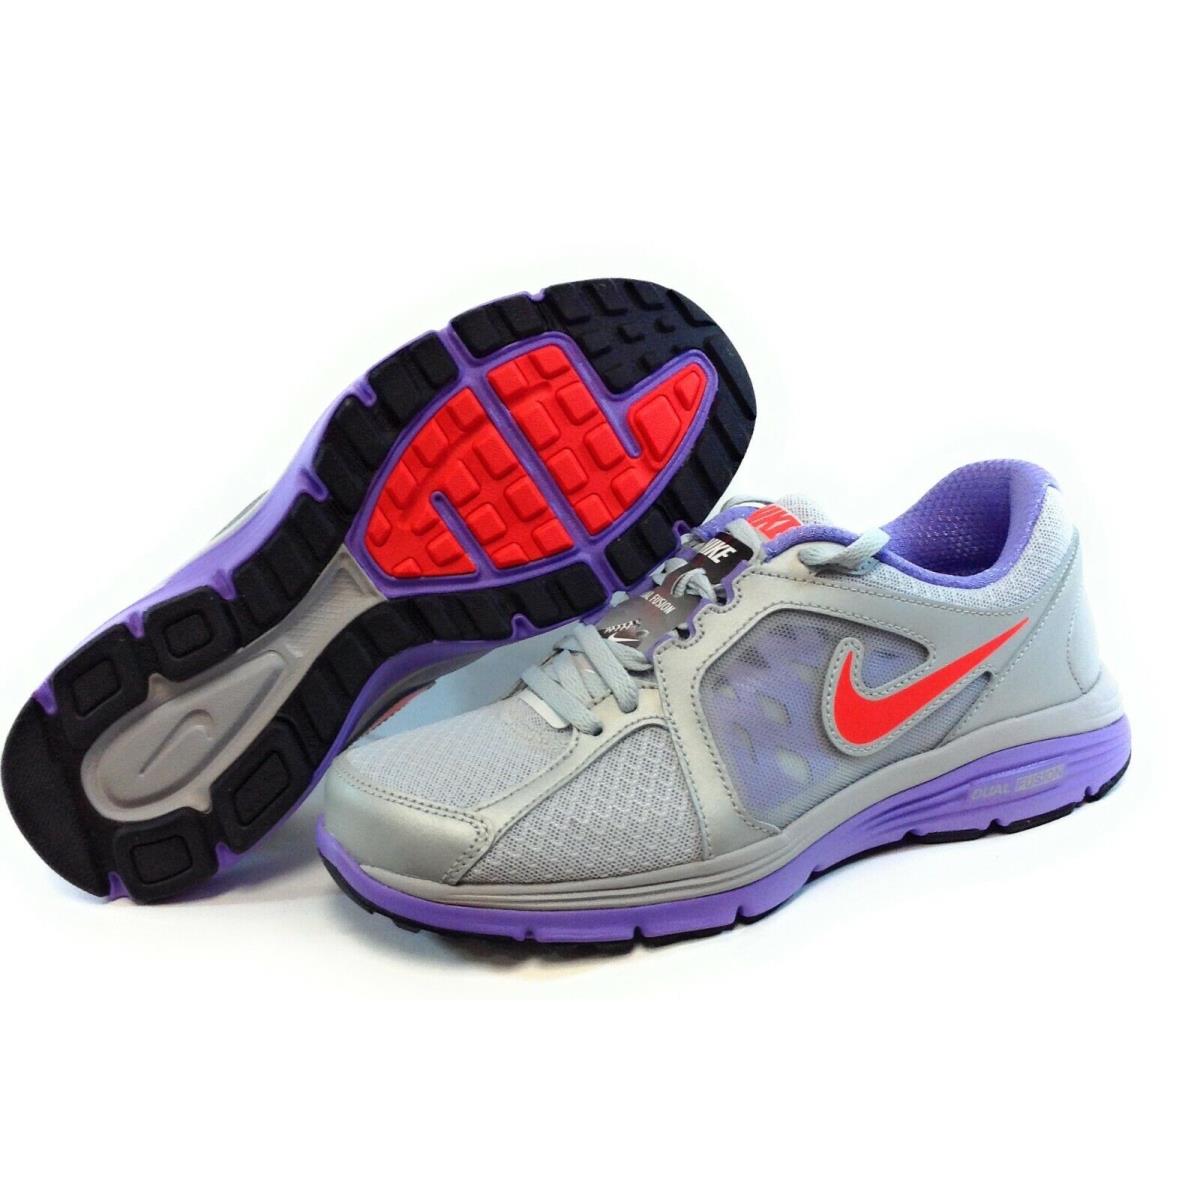 Womens Nike Dual Fusion Run 525752 007 Platinum Purple 2012 DS Sneakers Shoes - Pure Platinum